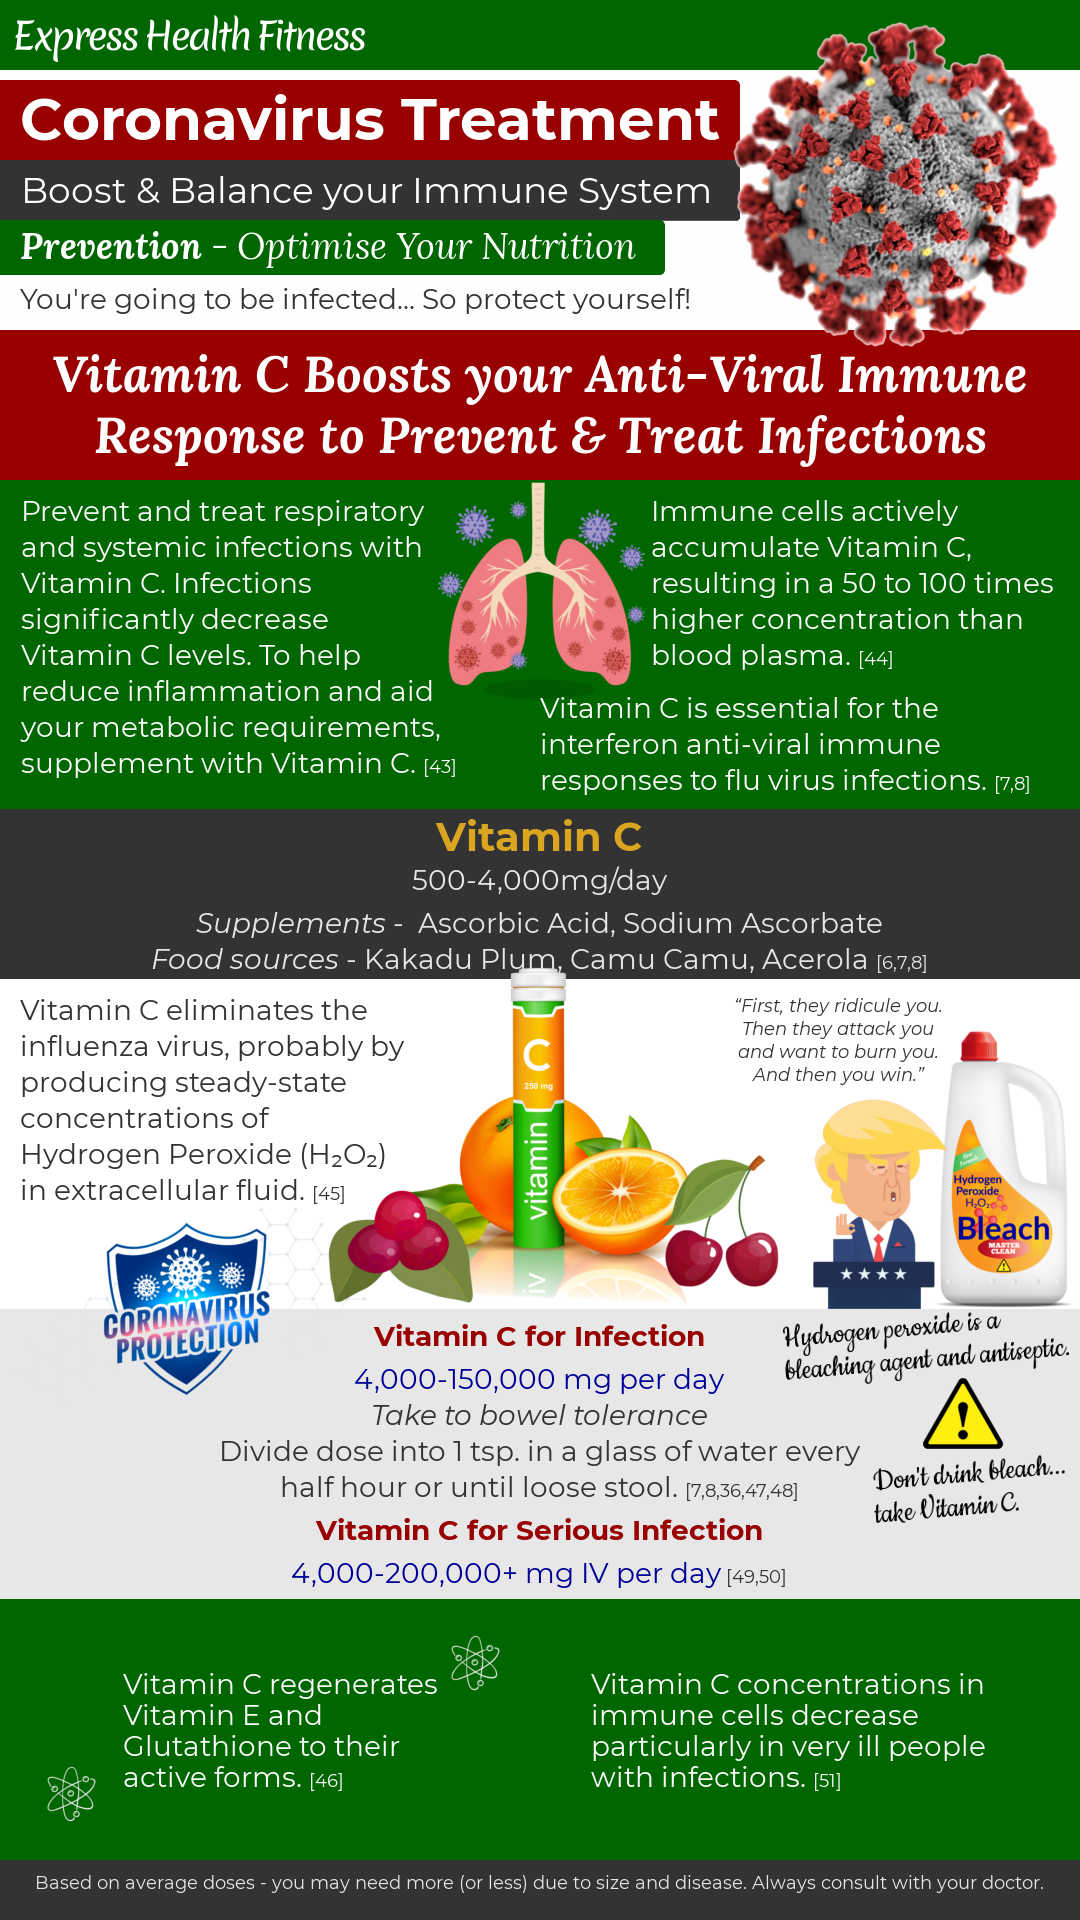 Coronavirus Treatment - Nutrition & Supplements - Prevention - Vitamin C